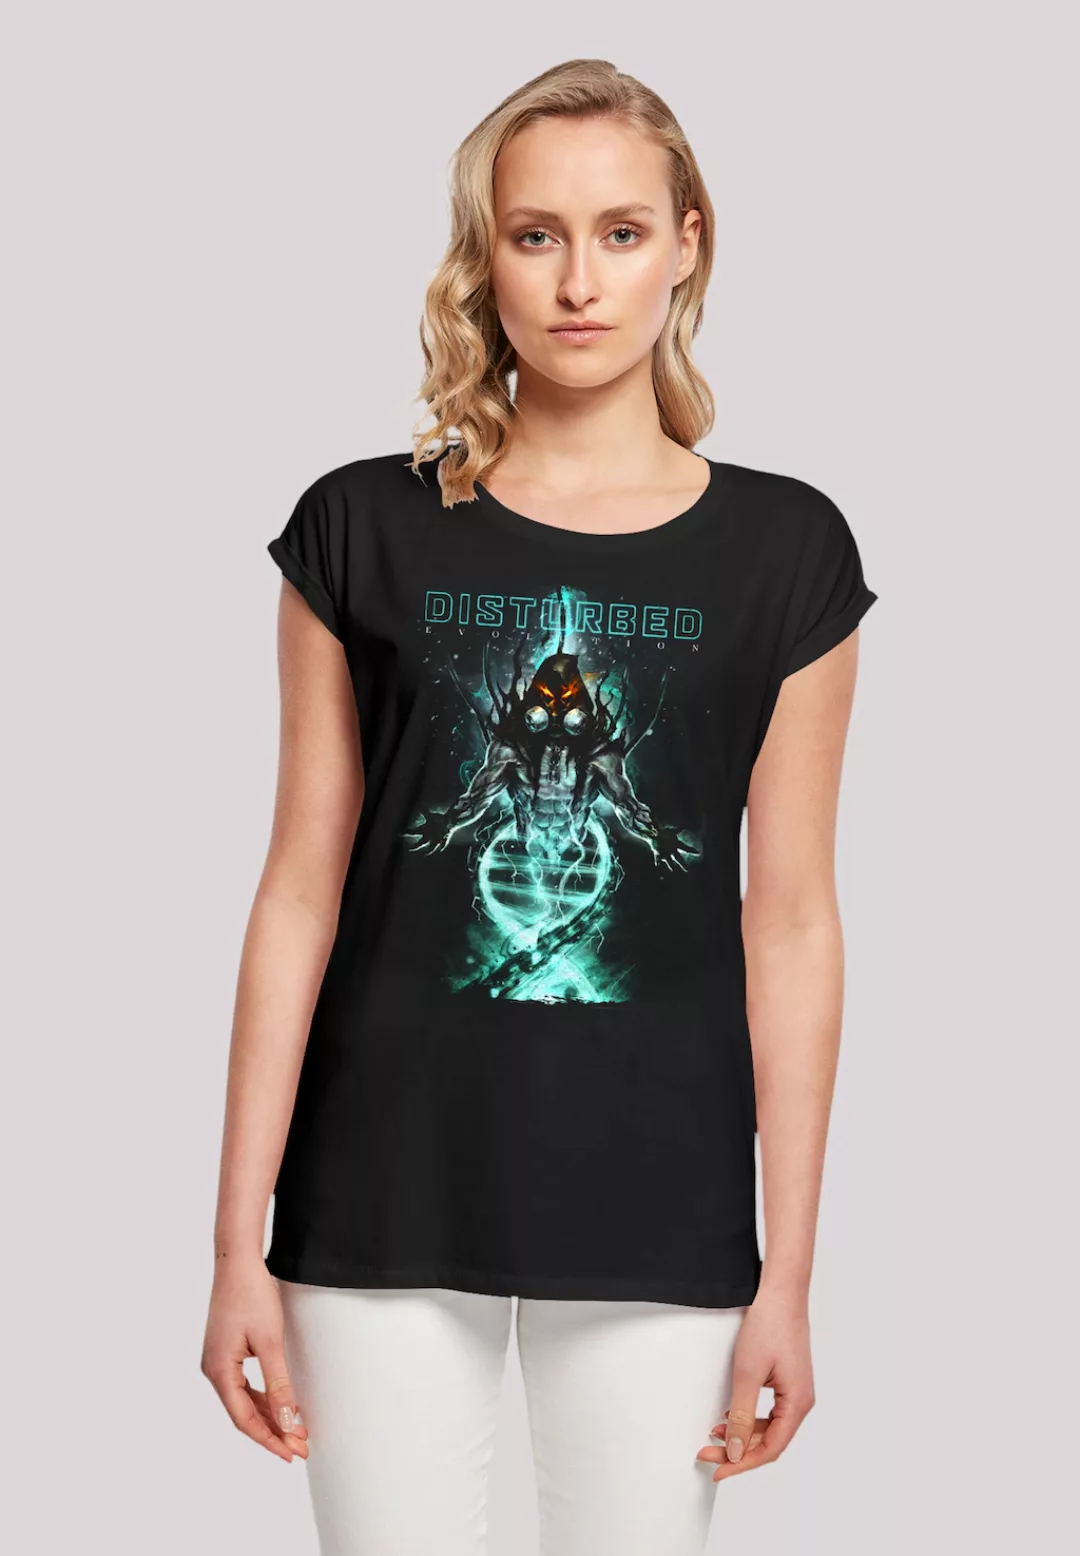 F4NT4STIC T-Shirt "Disturbed Heavy Metal Evolving Creature", Premium Qualit günstig online kaufen